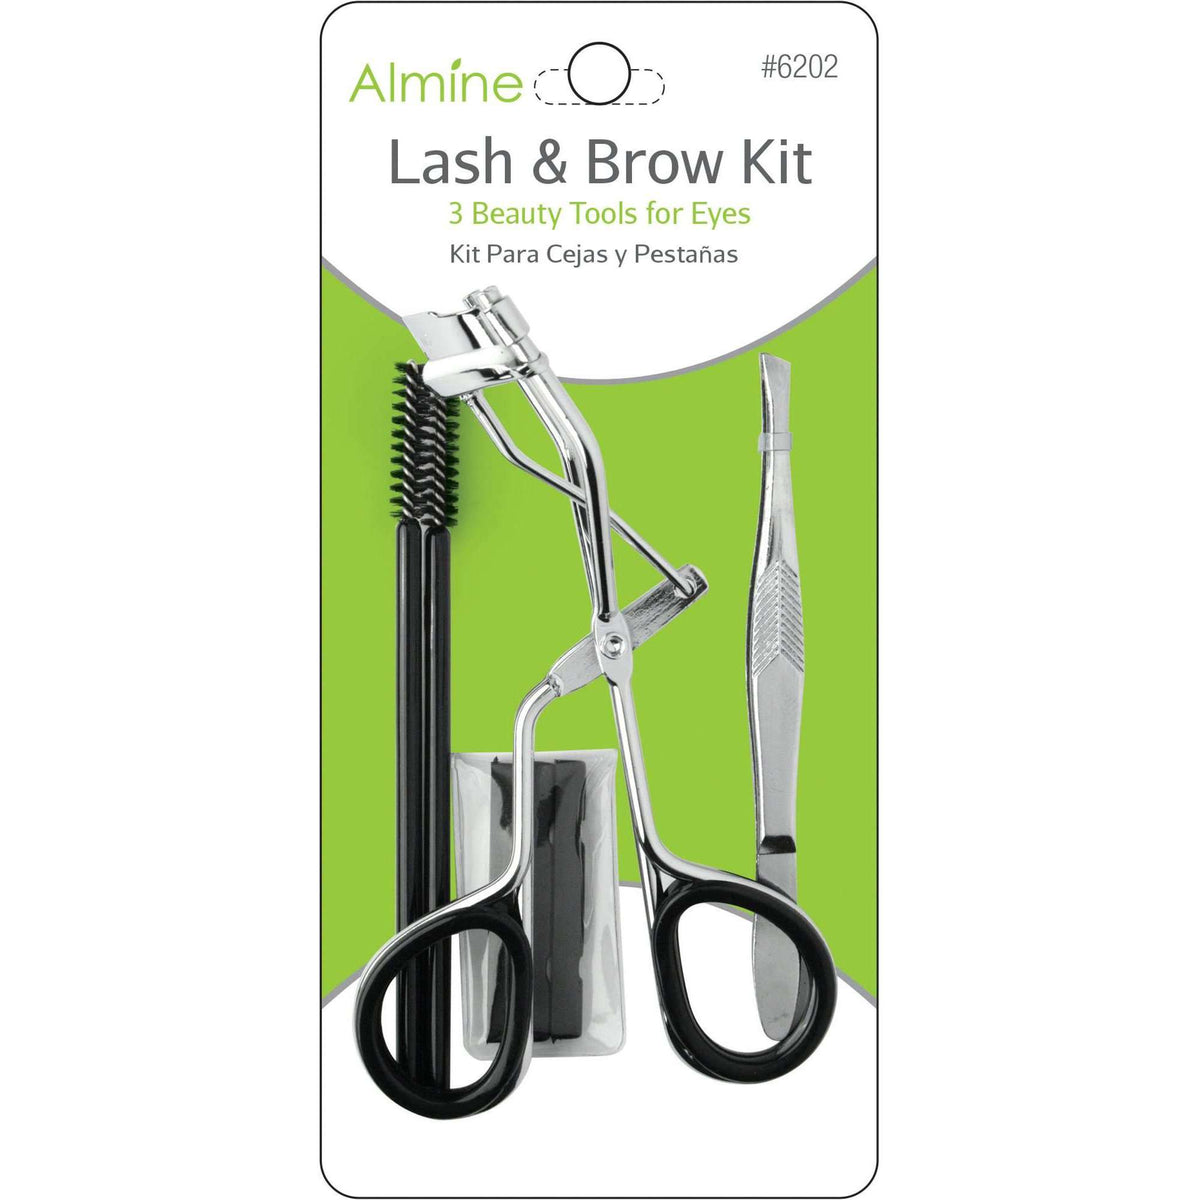 Almine Lash & Brow Kit